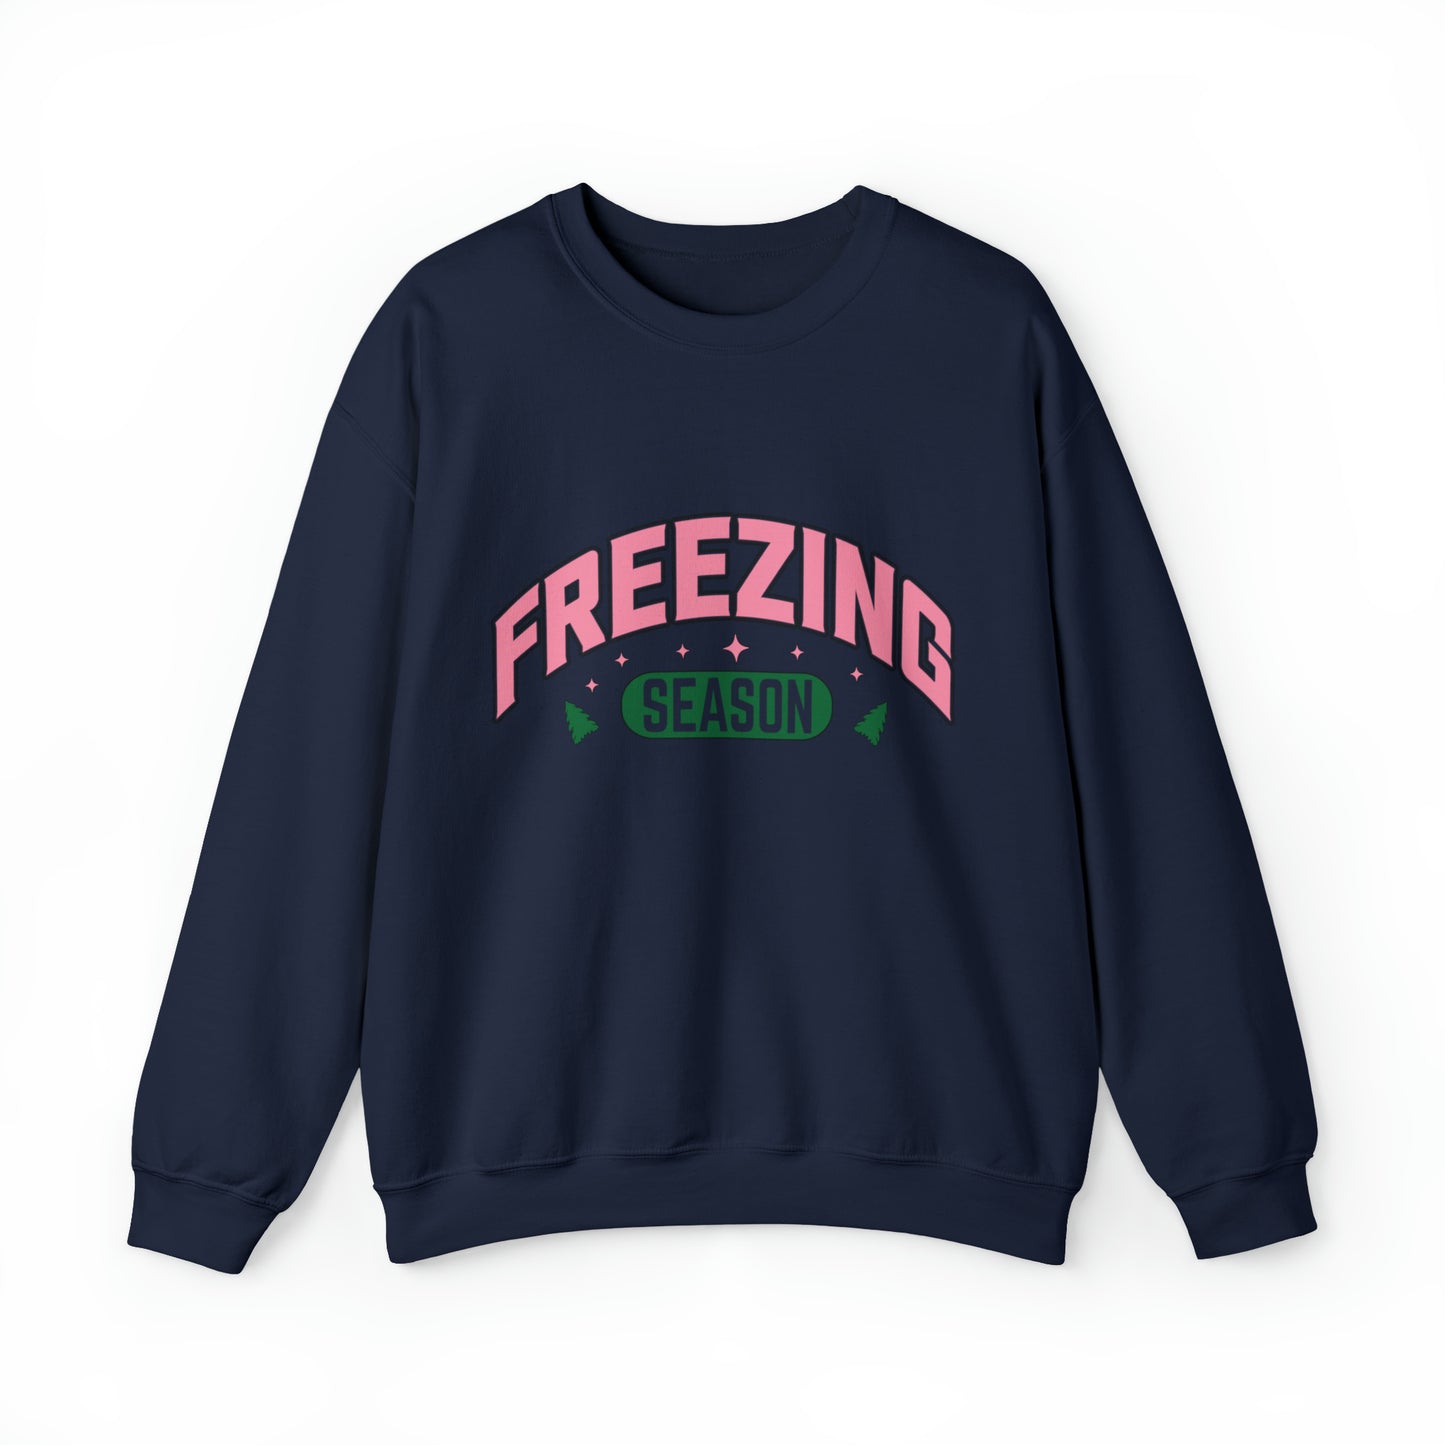 Freezing Season Women's Christmas Winter Crewneck Sweatshirt